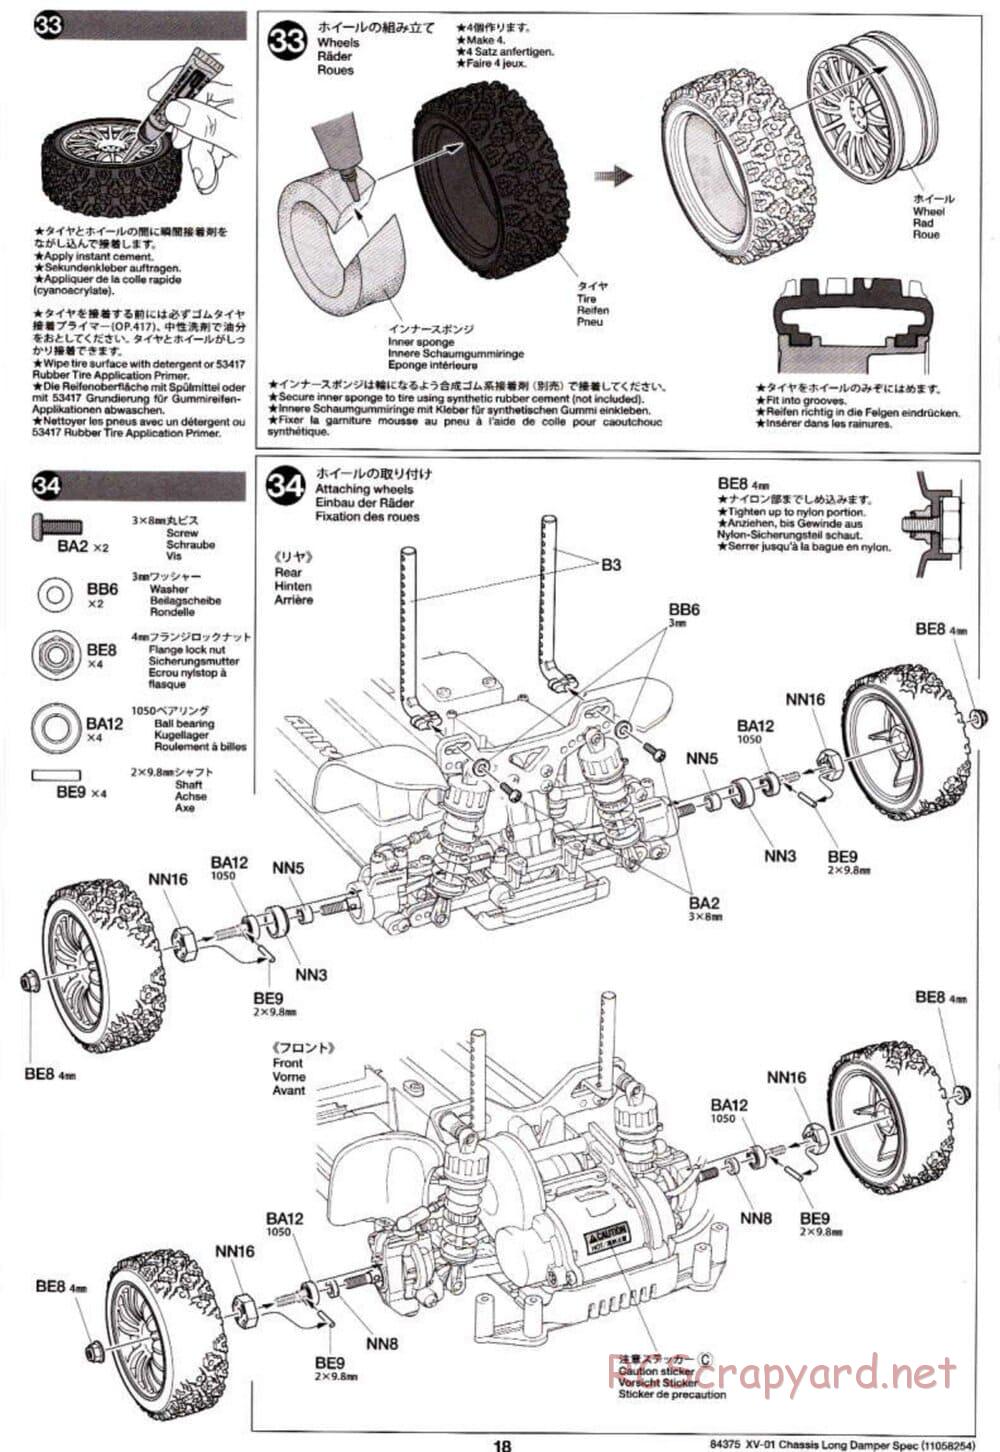 Tamiya - XV-01 Long Damper Spec Chassis - Manual - Page 18